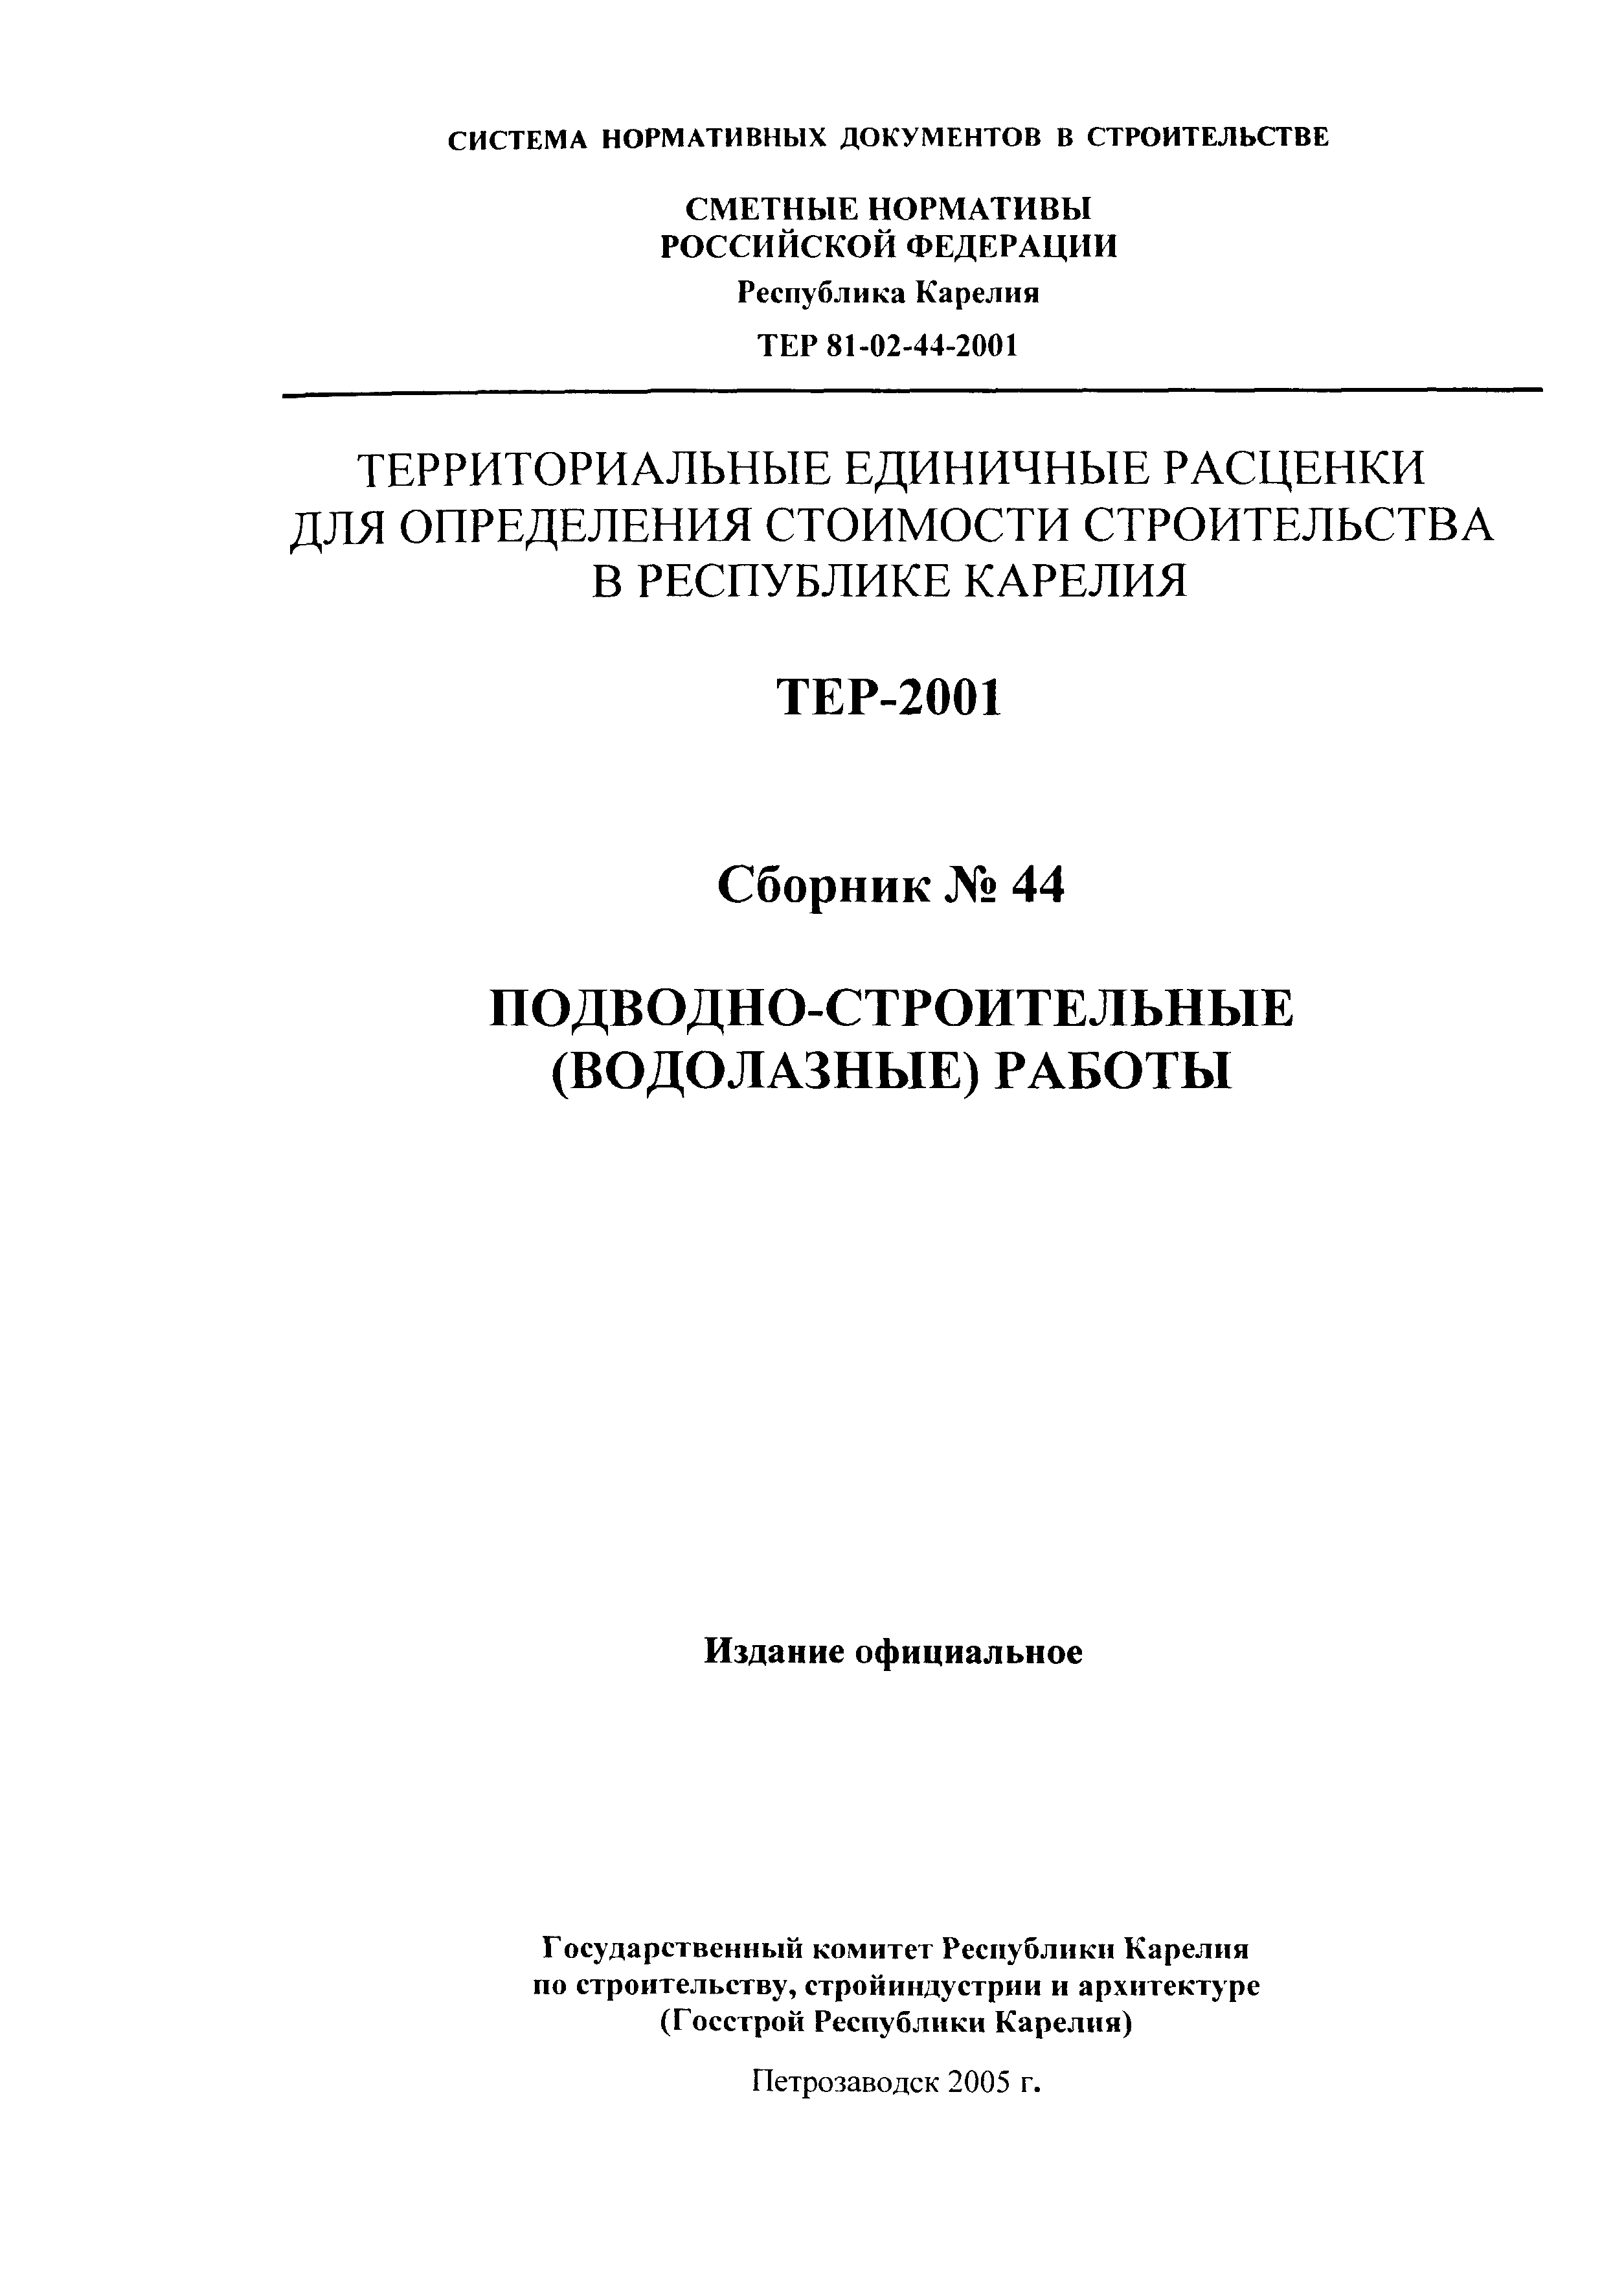 ТЕР Республика Карелия 2001-44